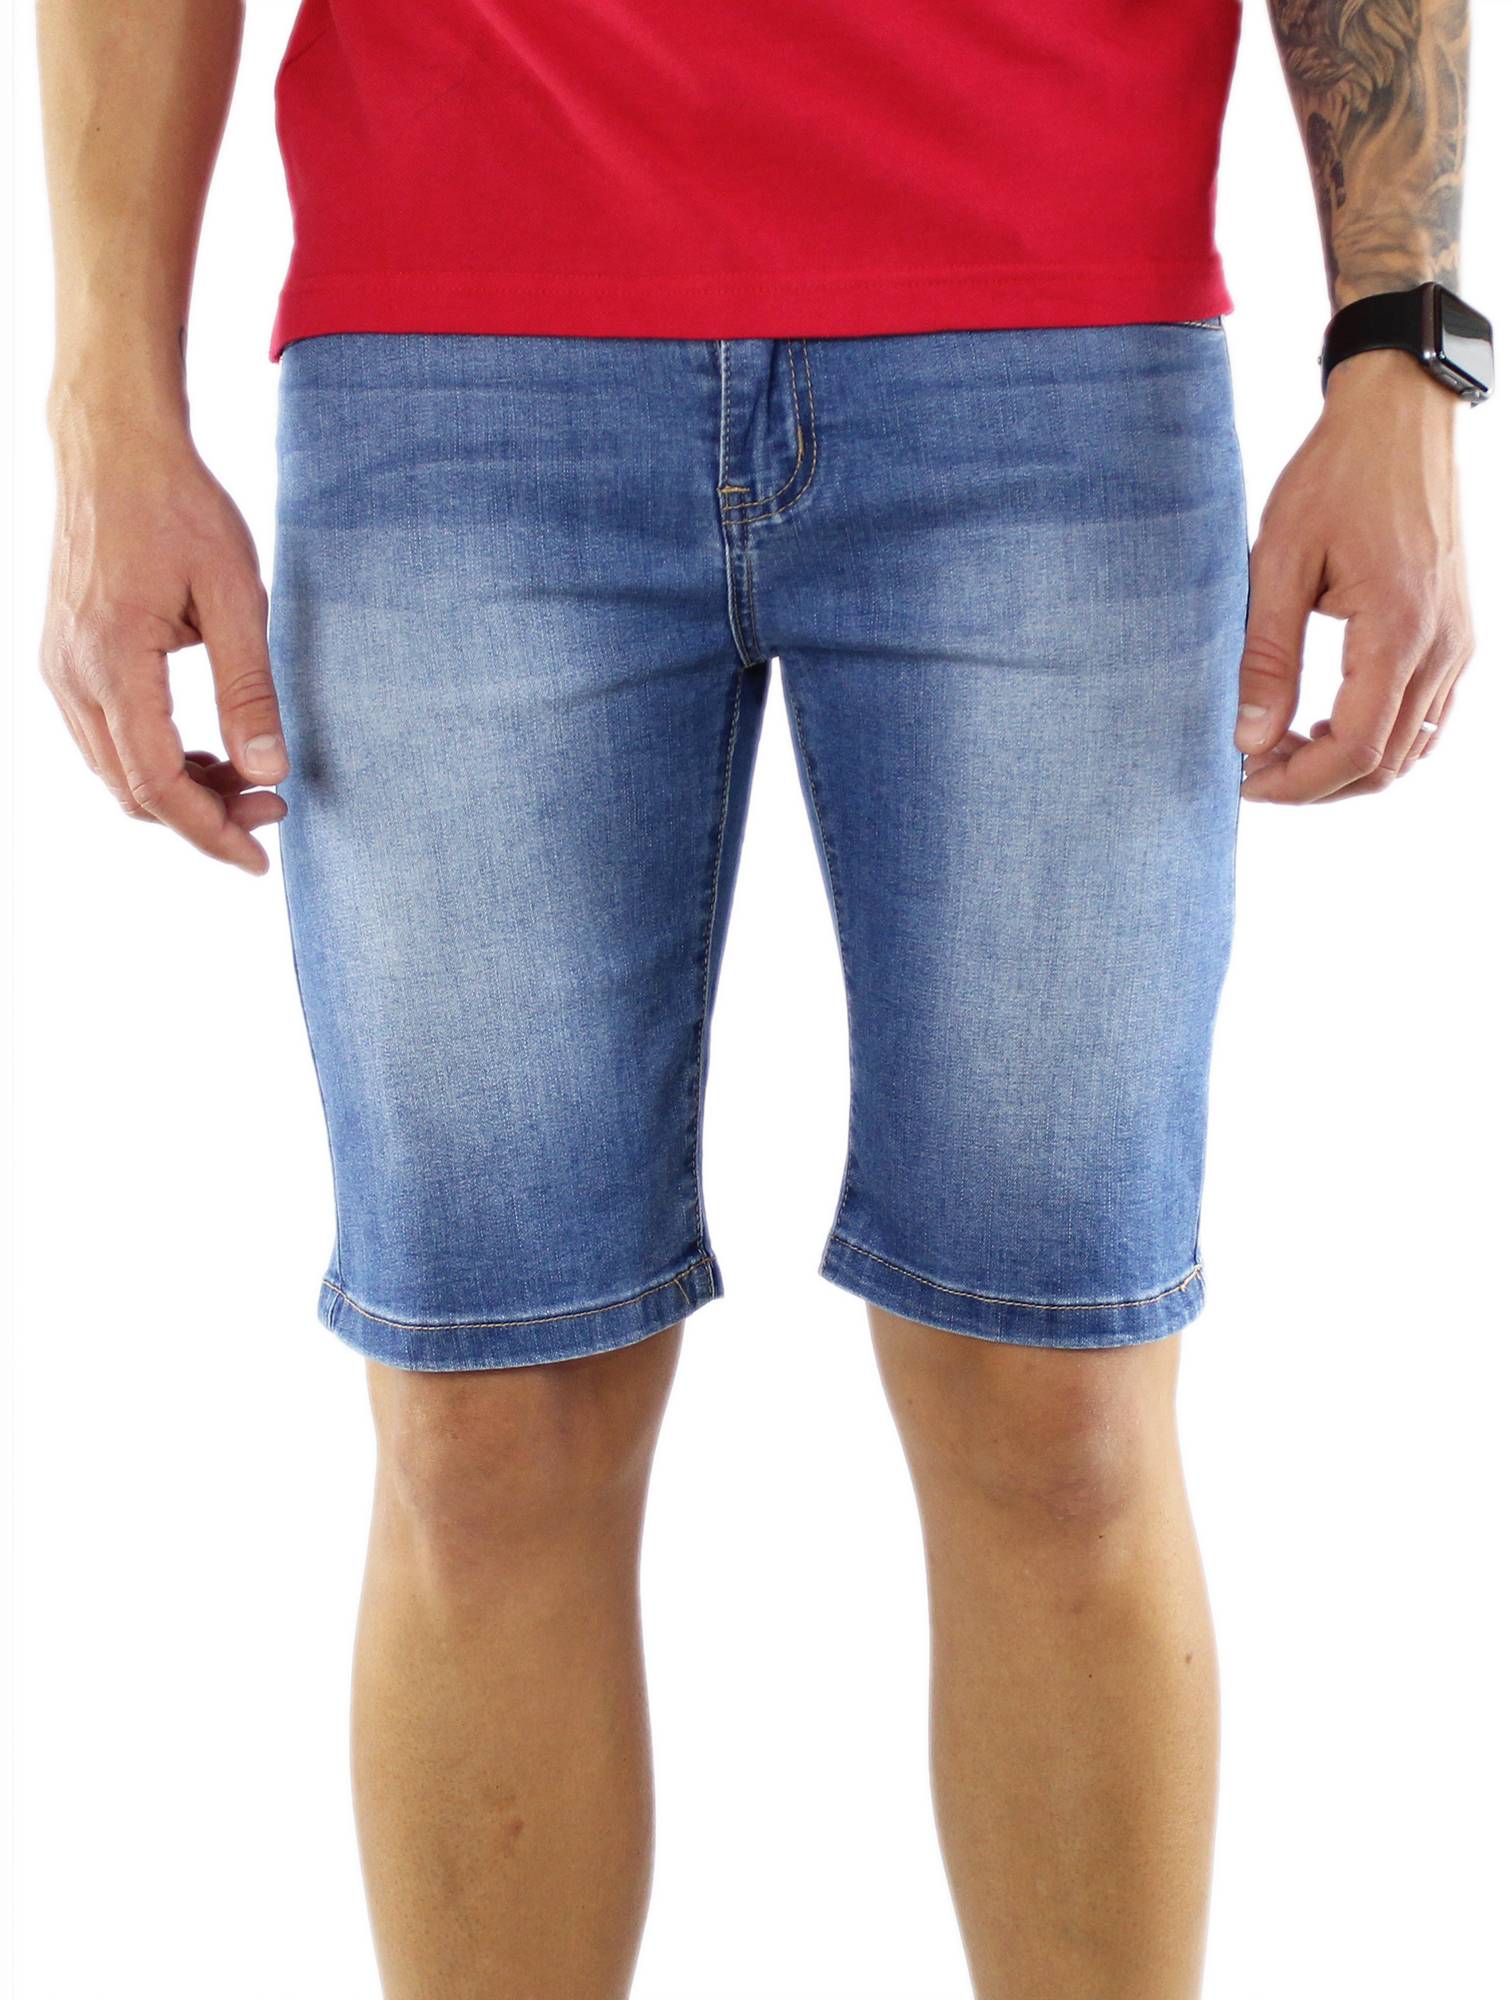 MODA UOMO Jeans Strappato sconto 83% Y Blu 52 EU: 46 Two Pantaloncini jeans 